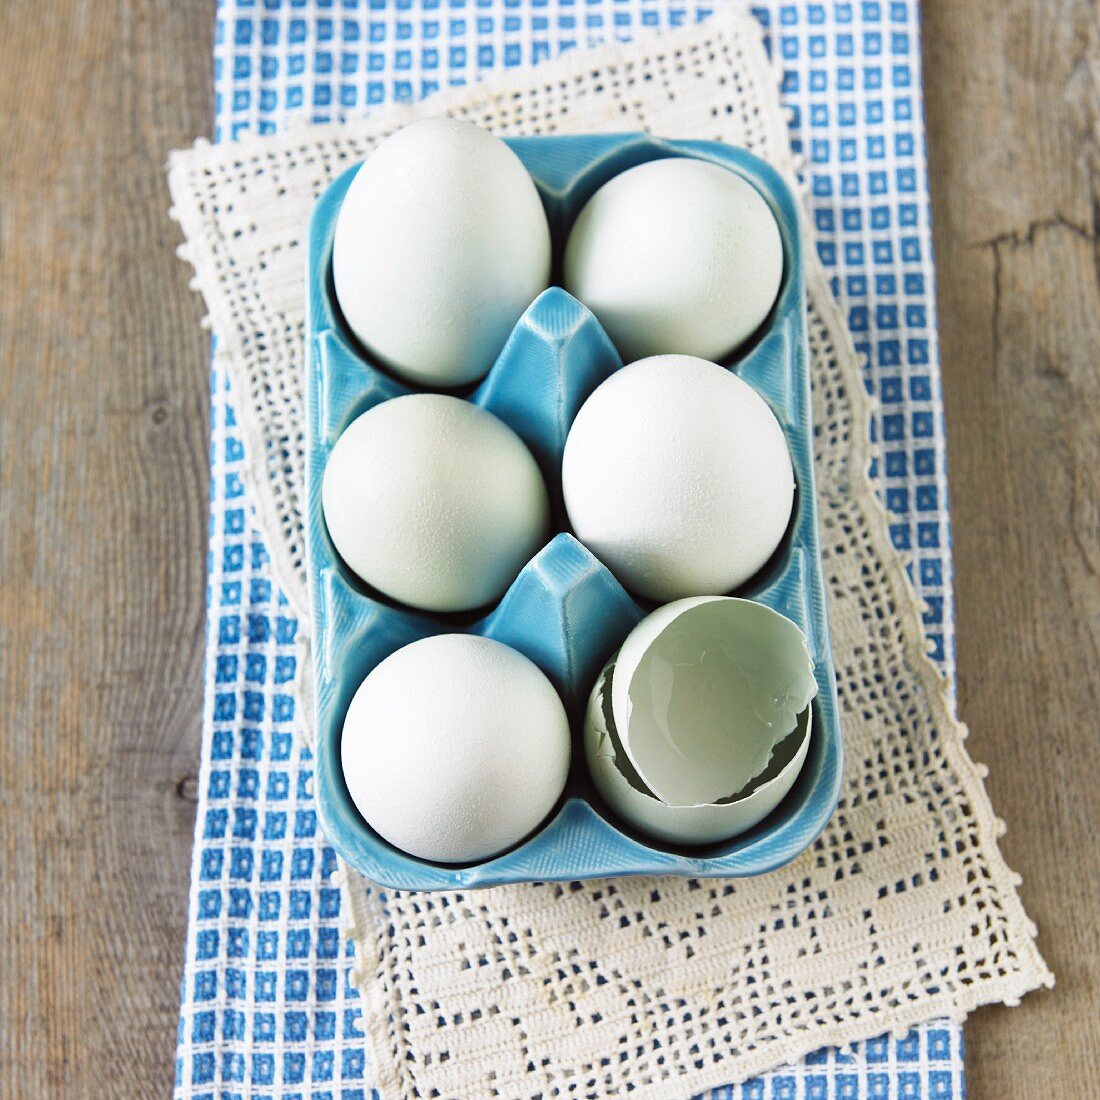 Six American Hen Eggs in an Egg Carton; One Broken; From Above